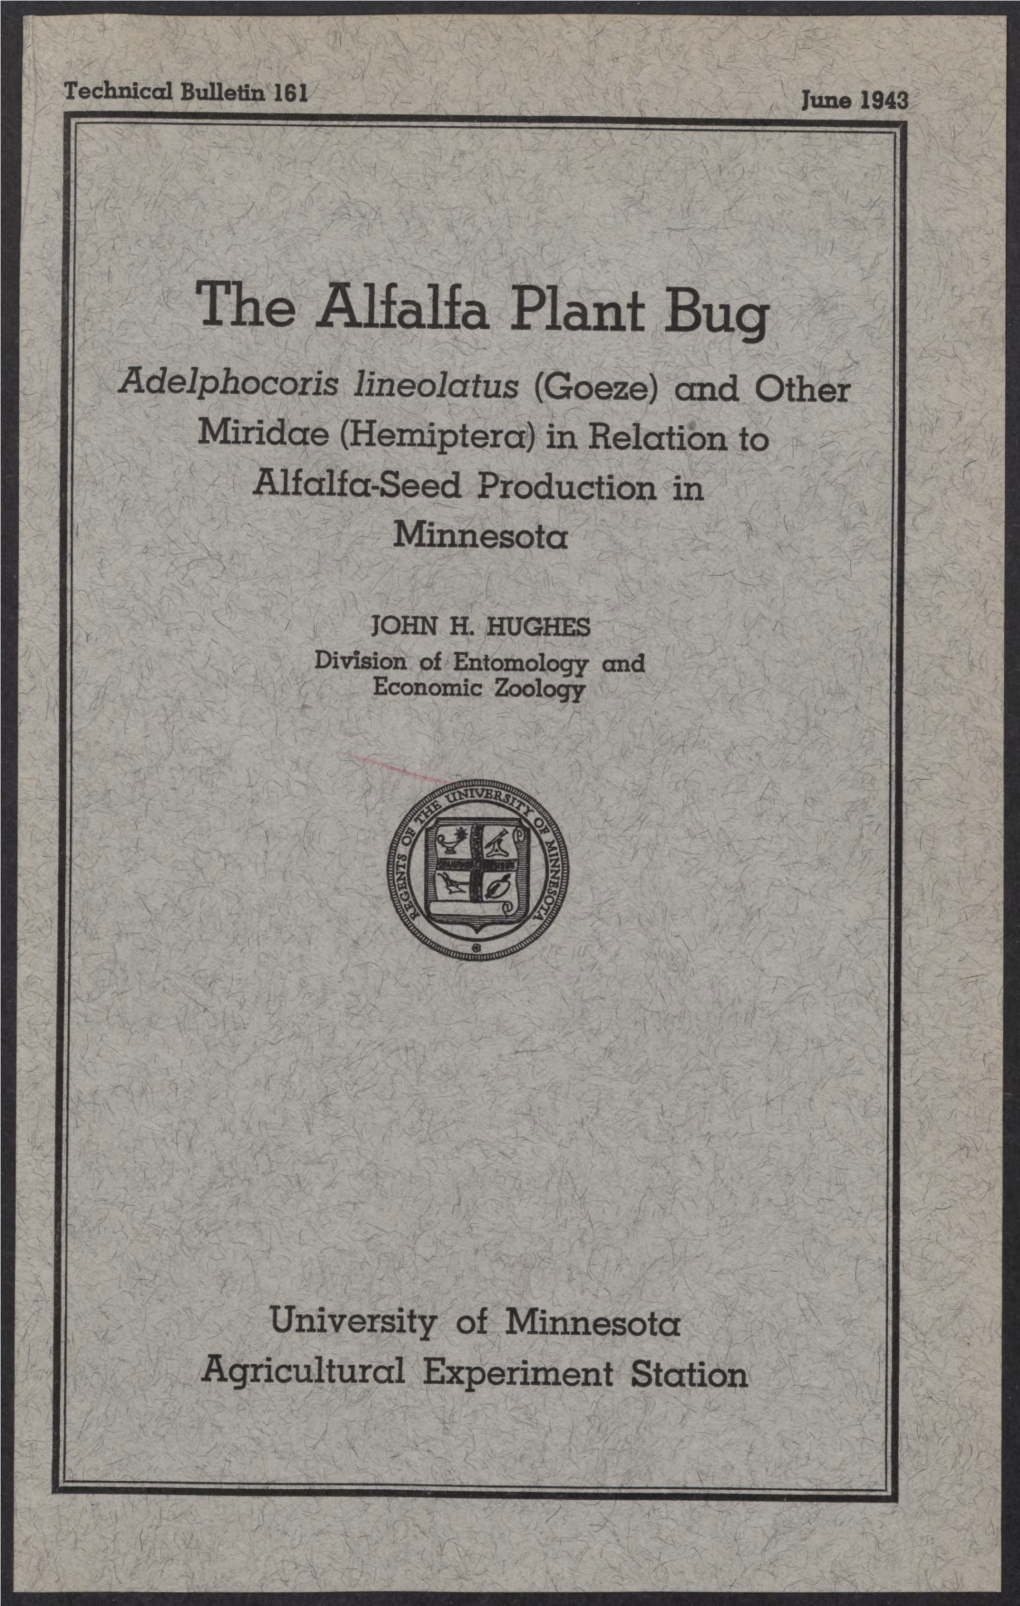 The Alfalfa Plant Bug Adelphocoris Lineolatus (Goeze) and Other Miridae (Hemiptera) in Relation to Alfalfa-Seed Production in Minnesota